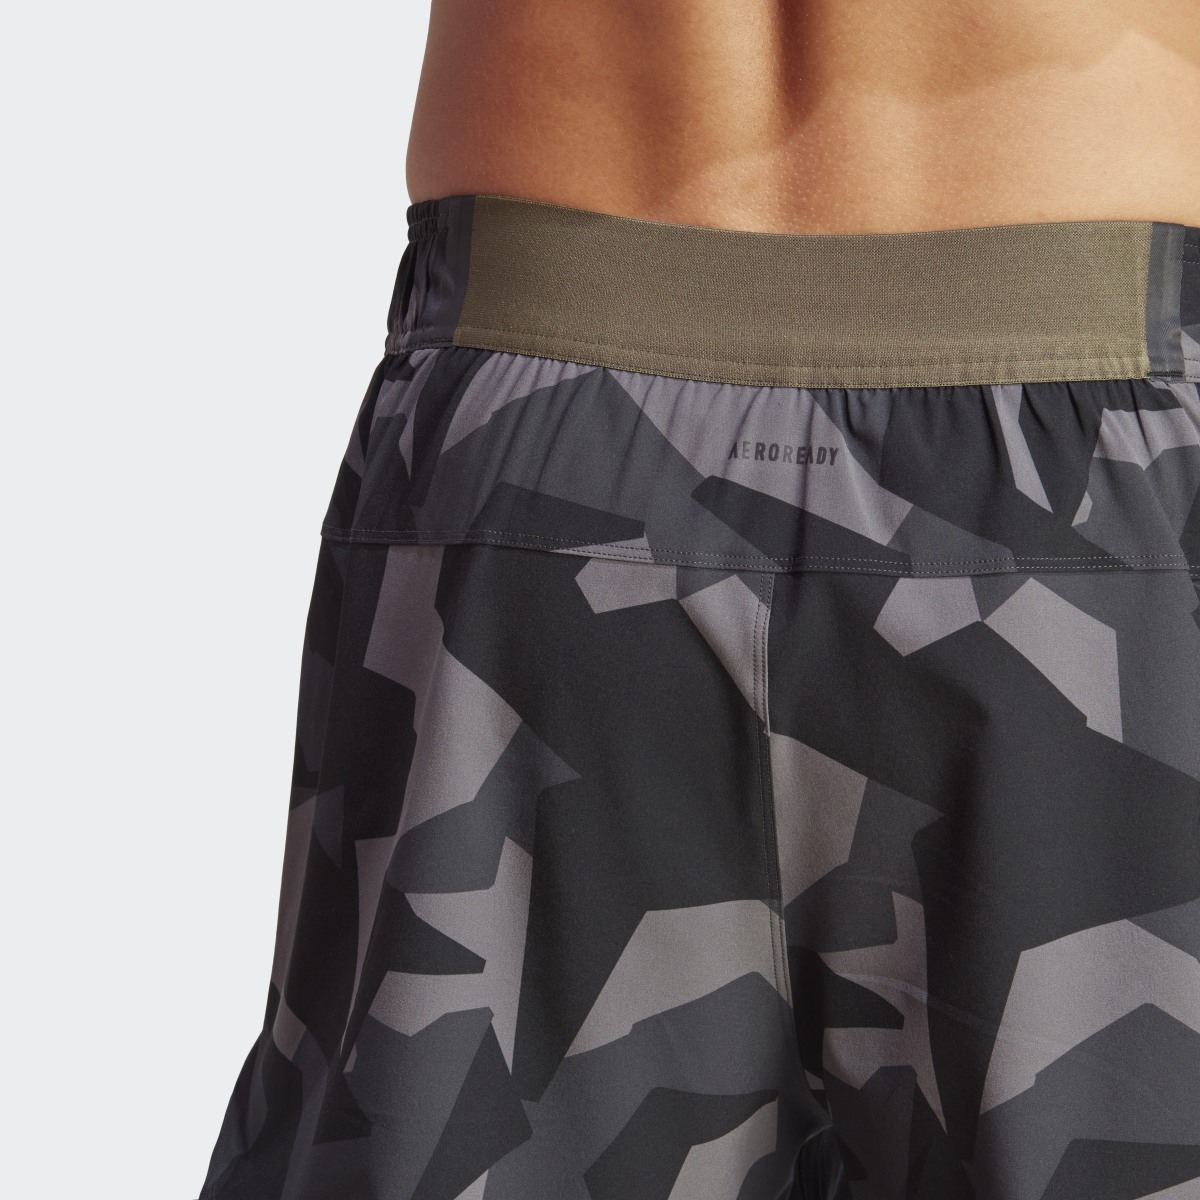 Adidas Shorts Designed for Training Pro Series Strength. 8